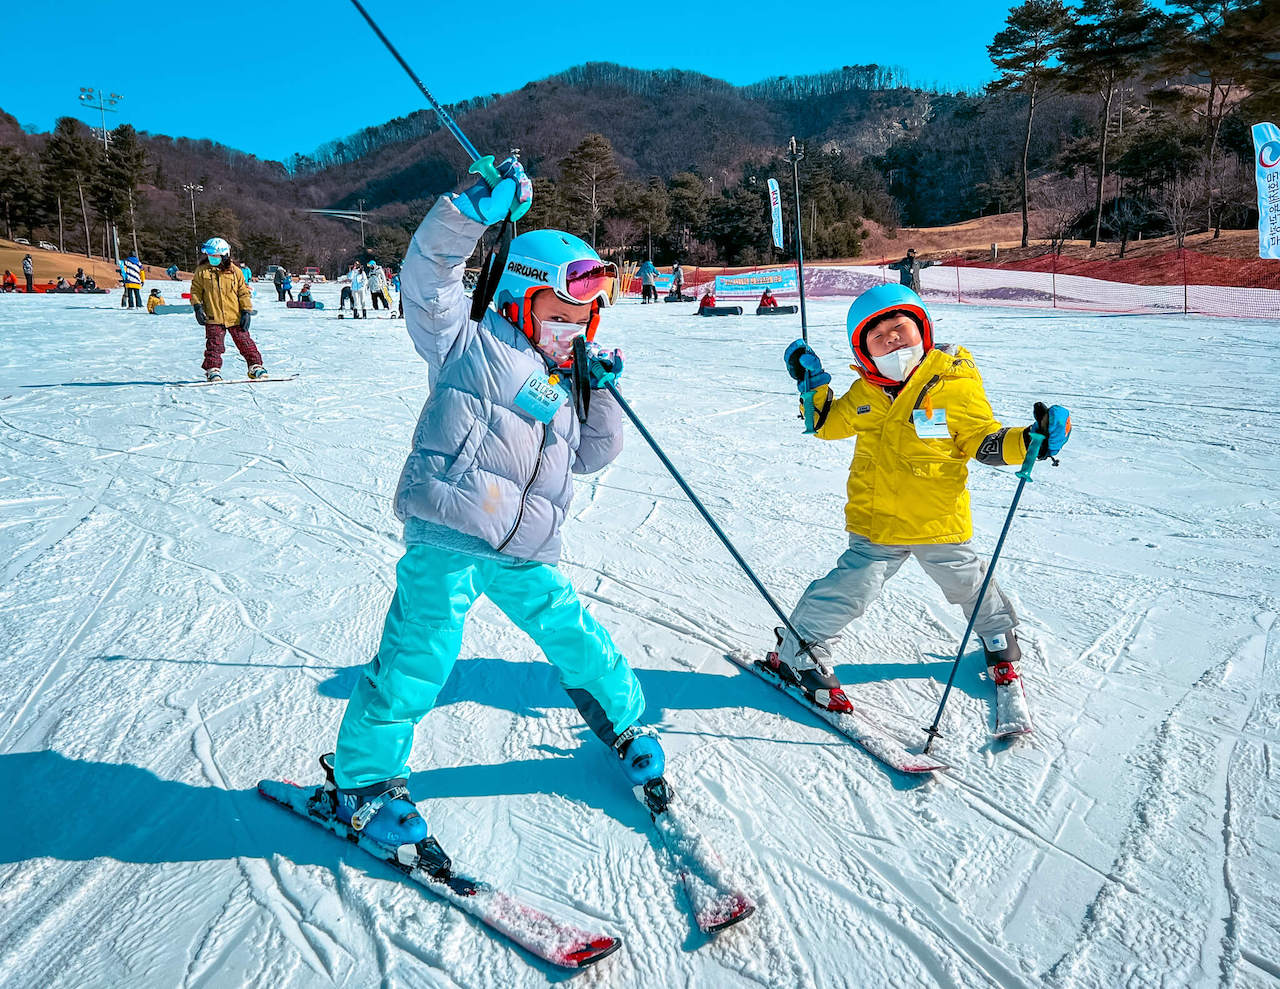 oak valley ski resort near seoul